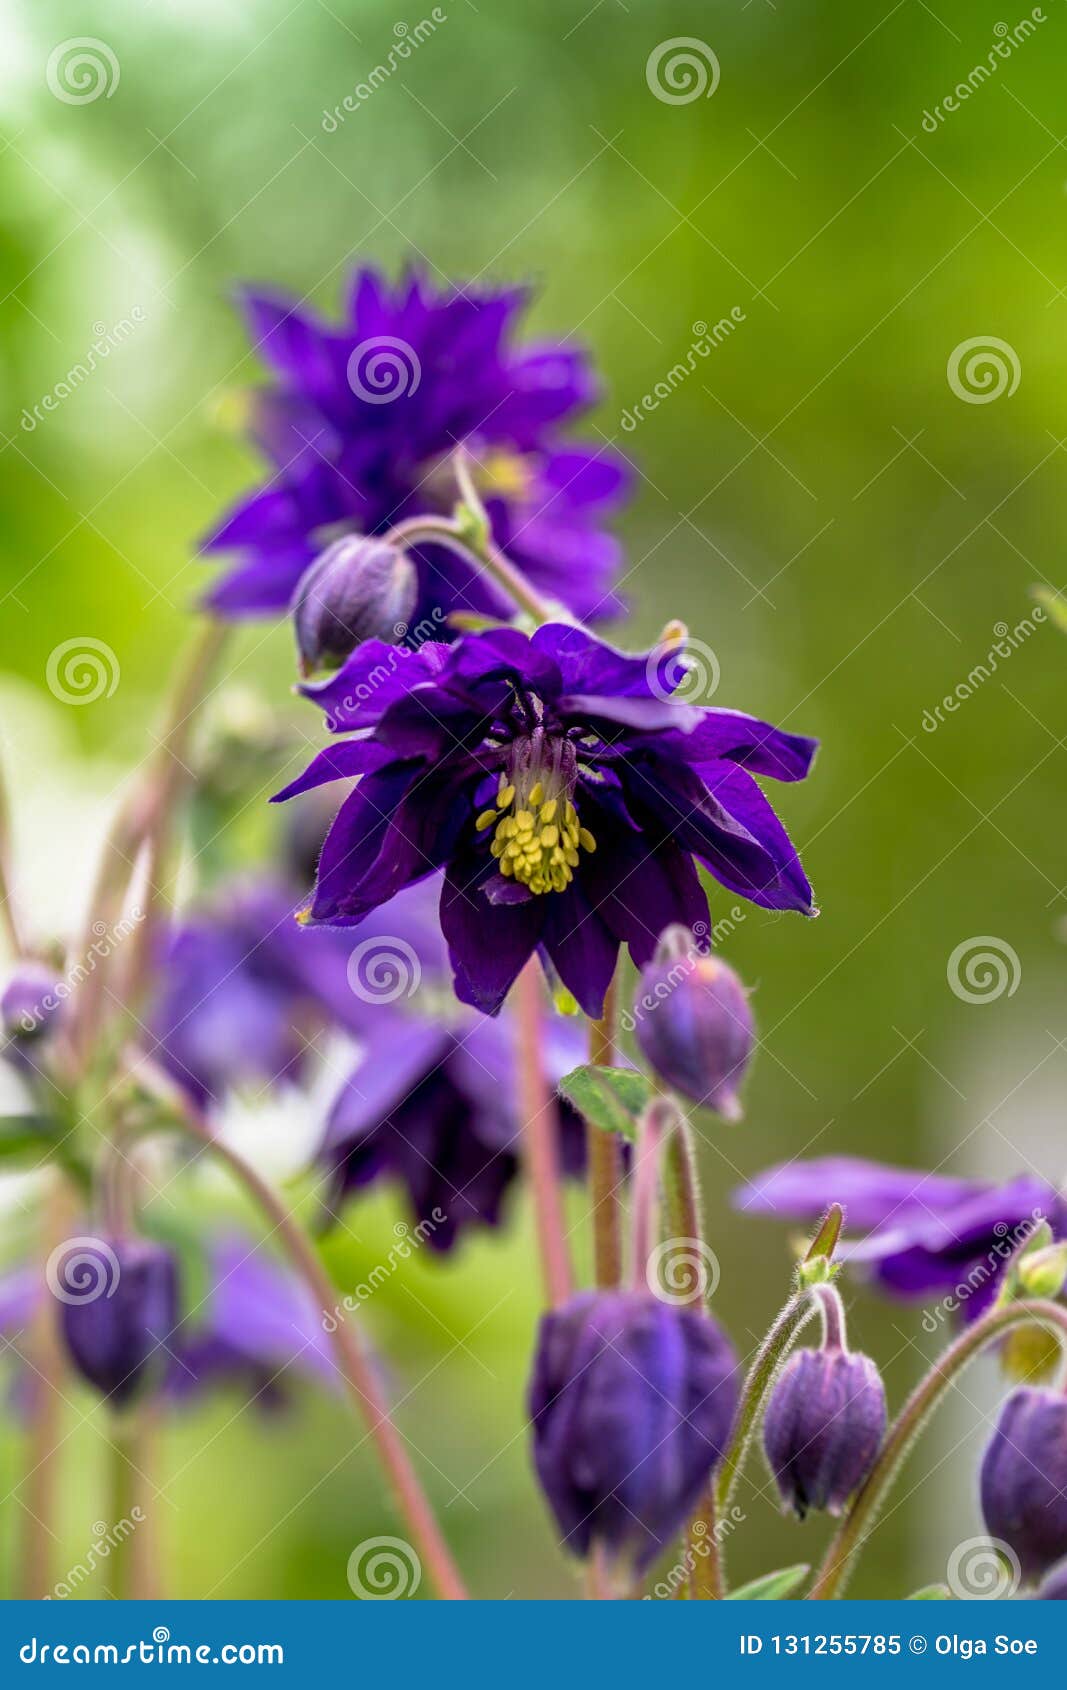 blue flowers of the two-colored european columbin `blue barlow` aquilegia vulgaris plena